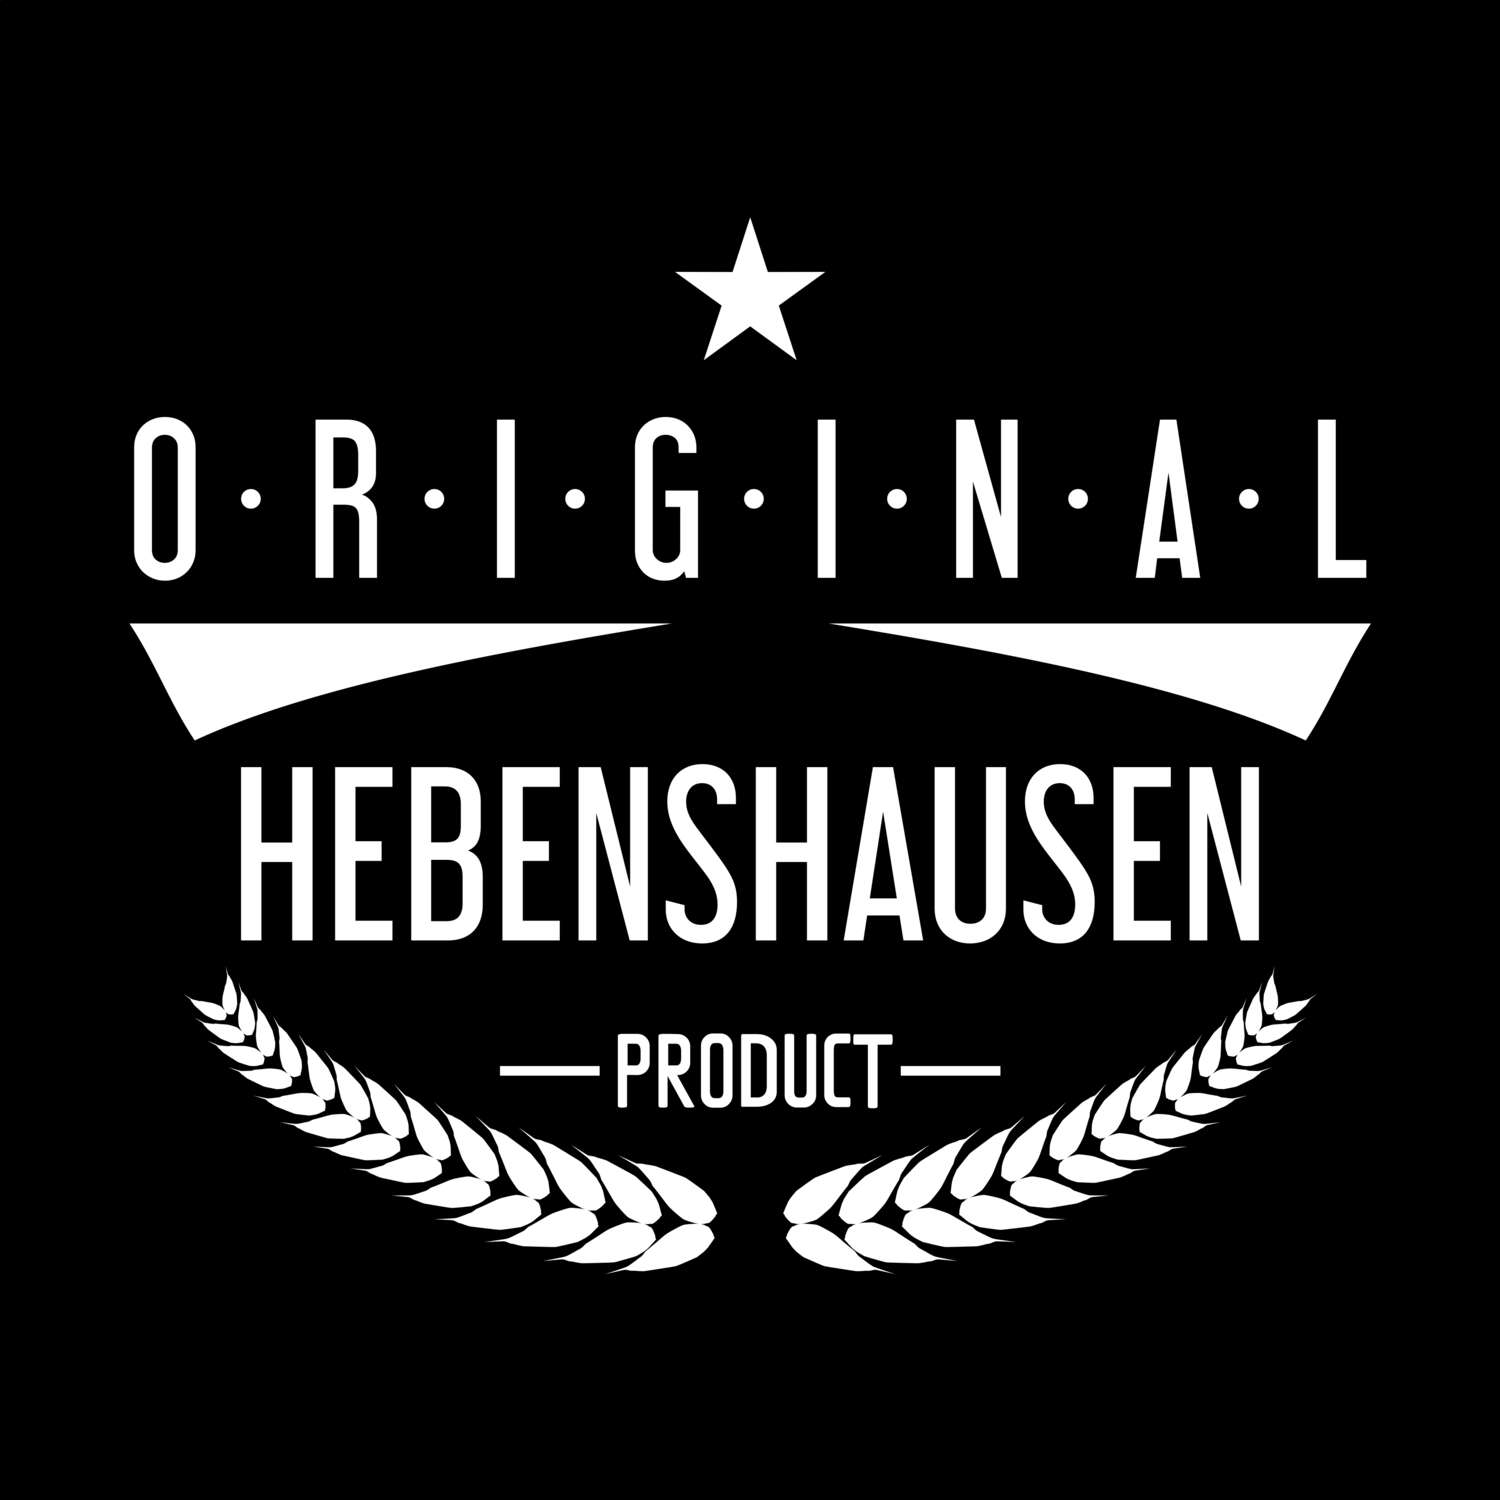 Hebenshausen T-Shirt »Original Product«